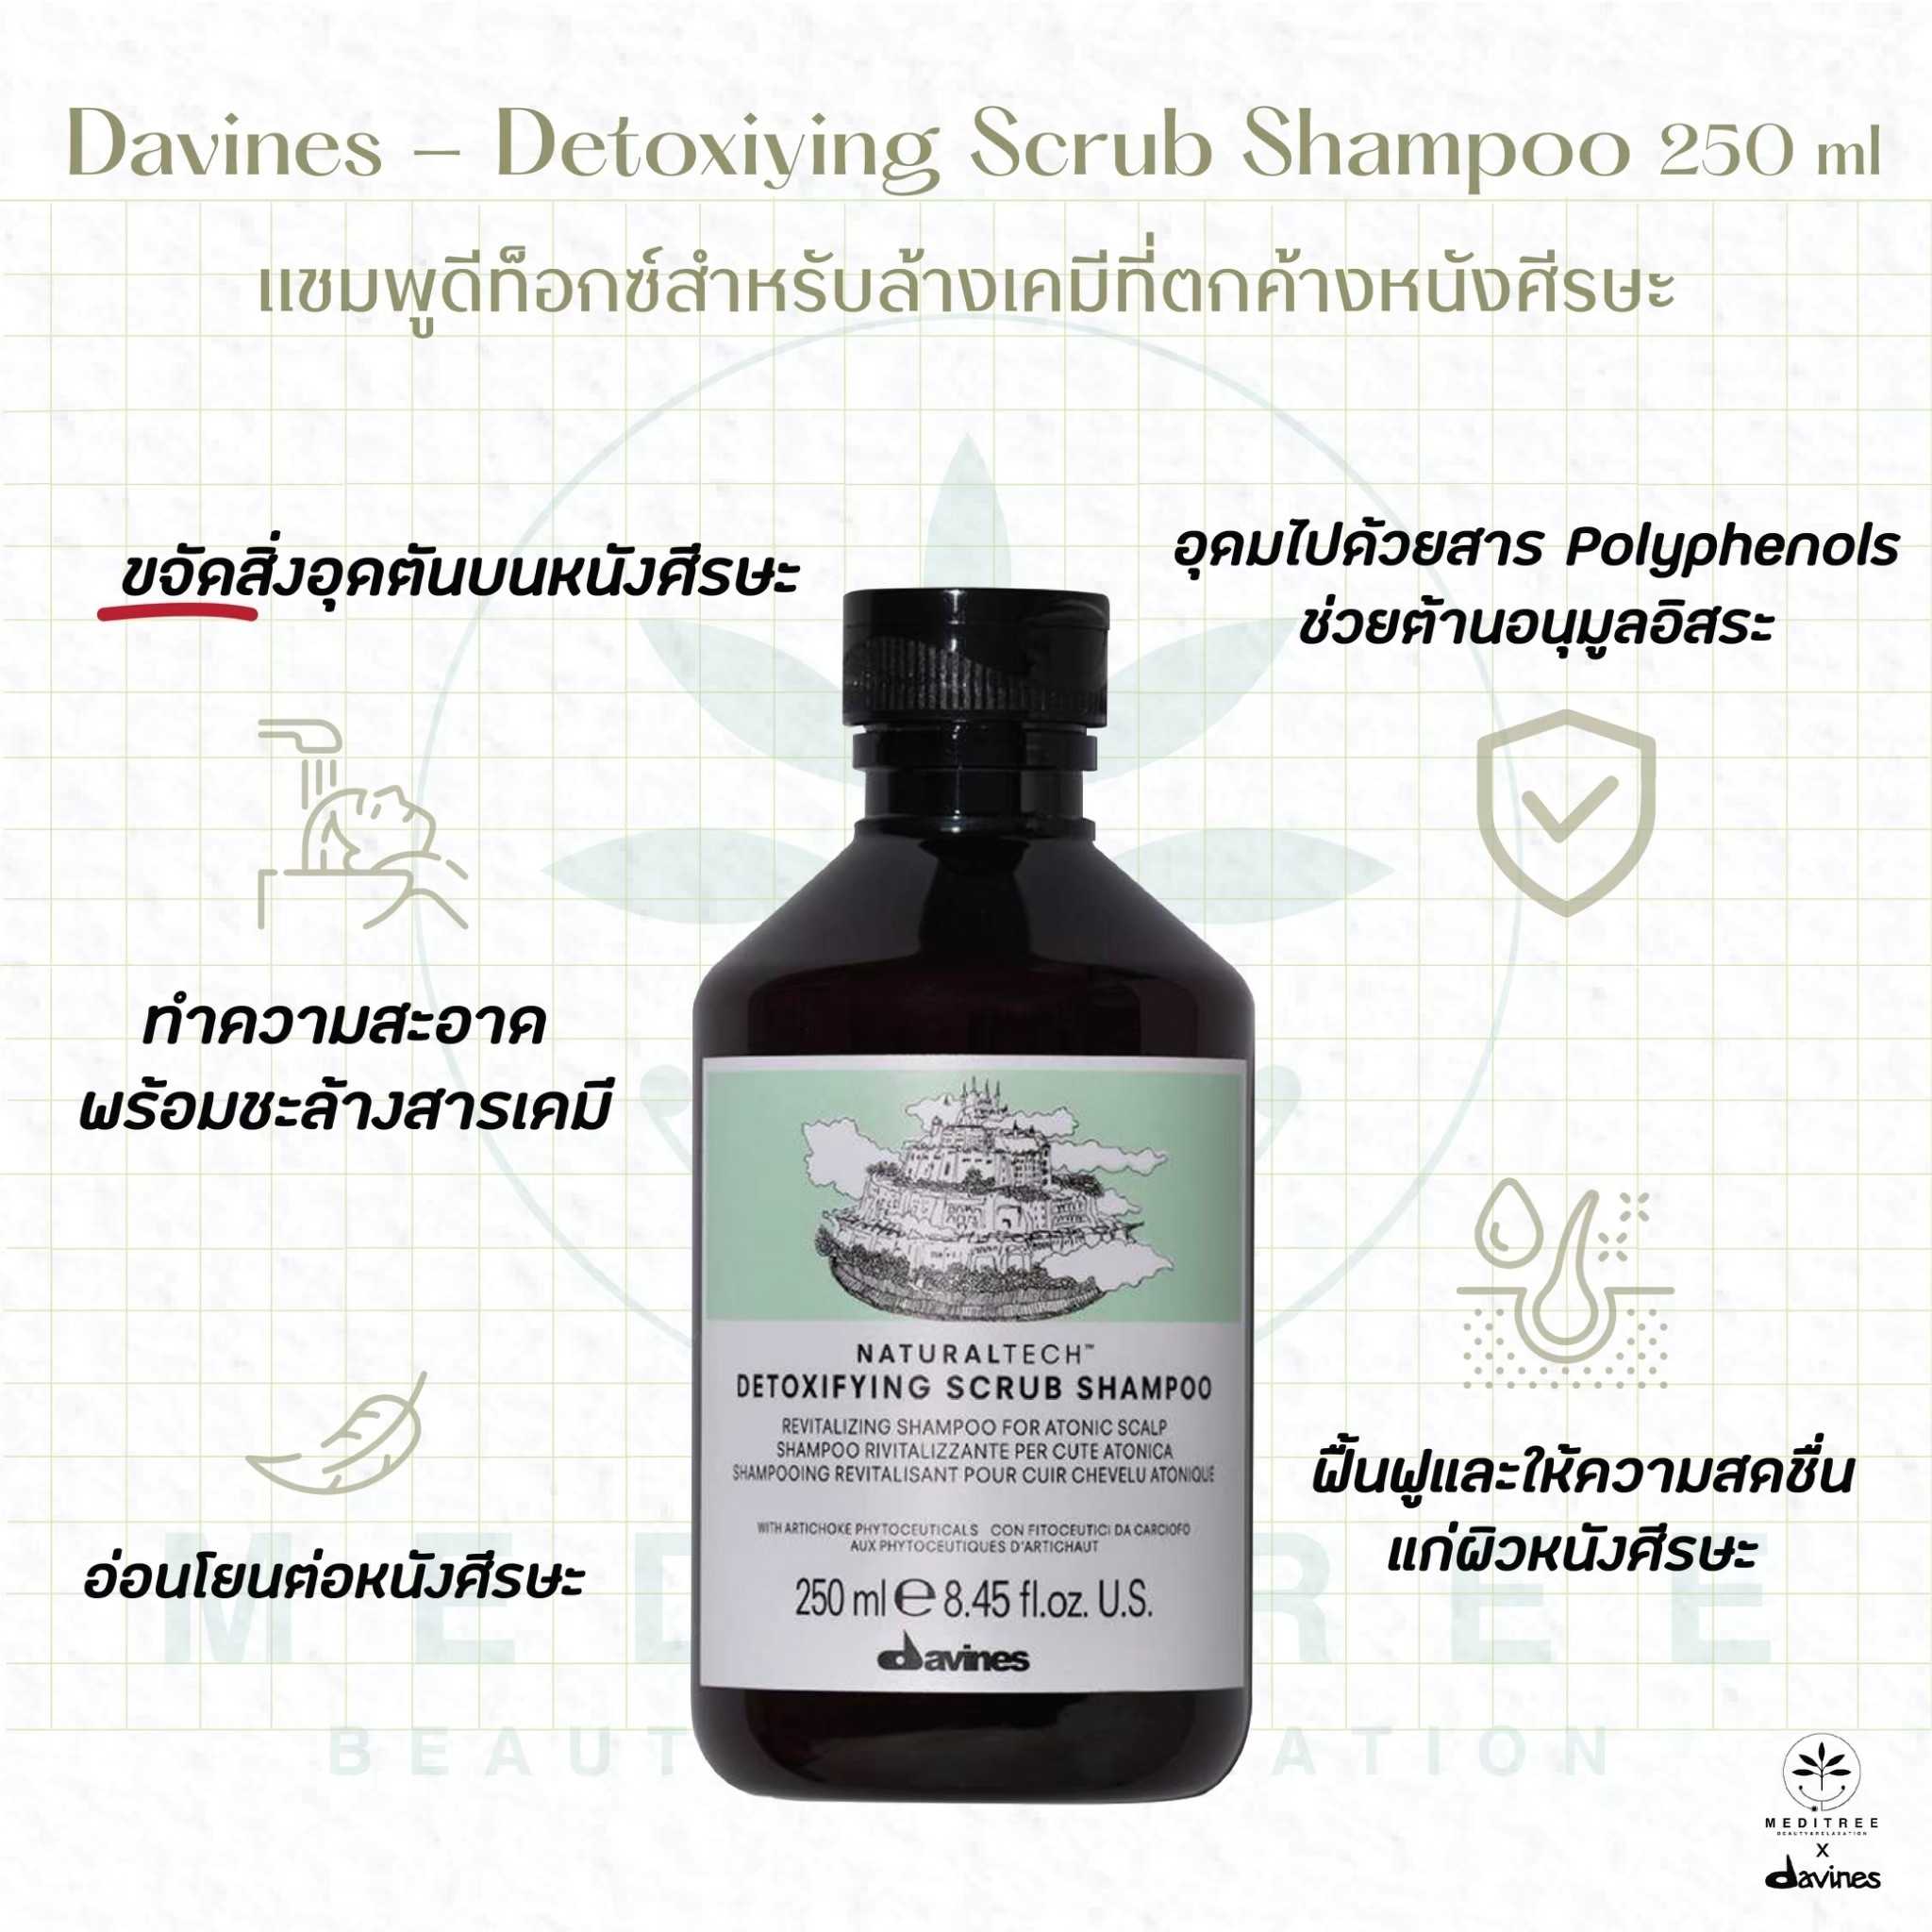 Davines - Detoxiying Scrub Shampoo 250 ml แชมพูดีท็อกซ์สำหรับล้างเคมีที่ตกค้างหนังศีรษะ